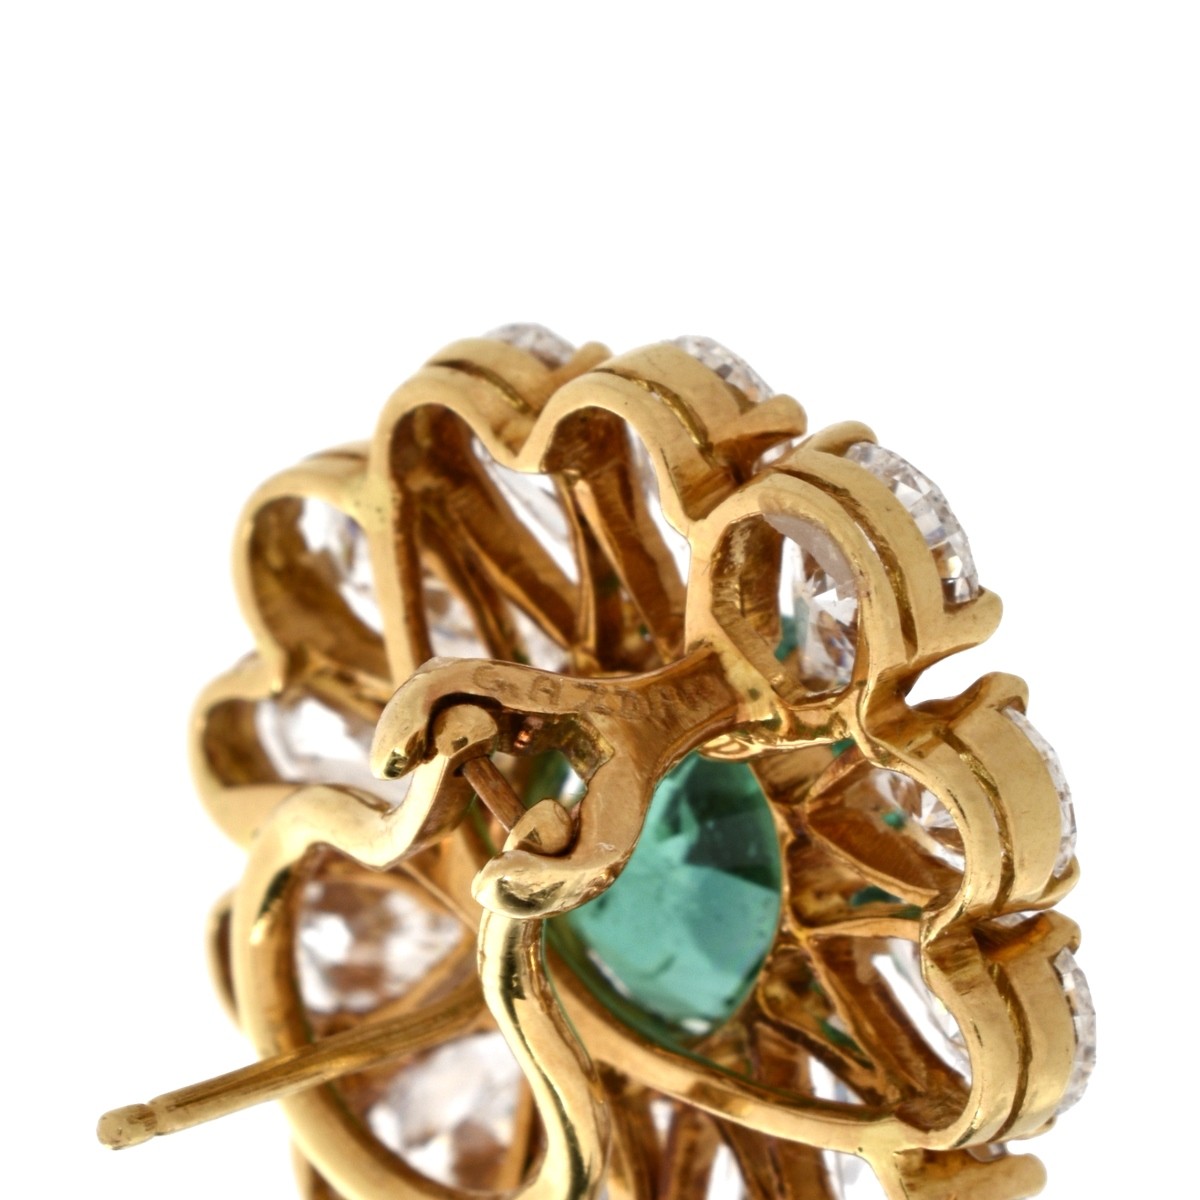 AGL Emerald, Diamond and 20K Earrings